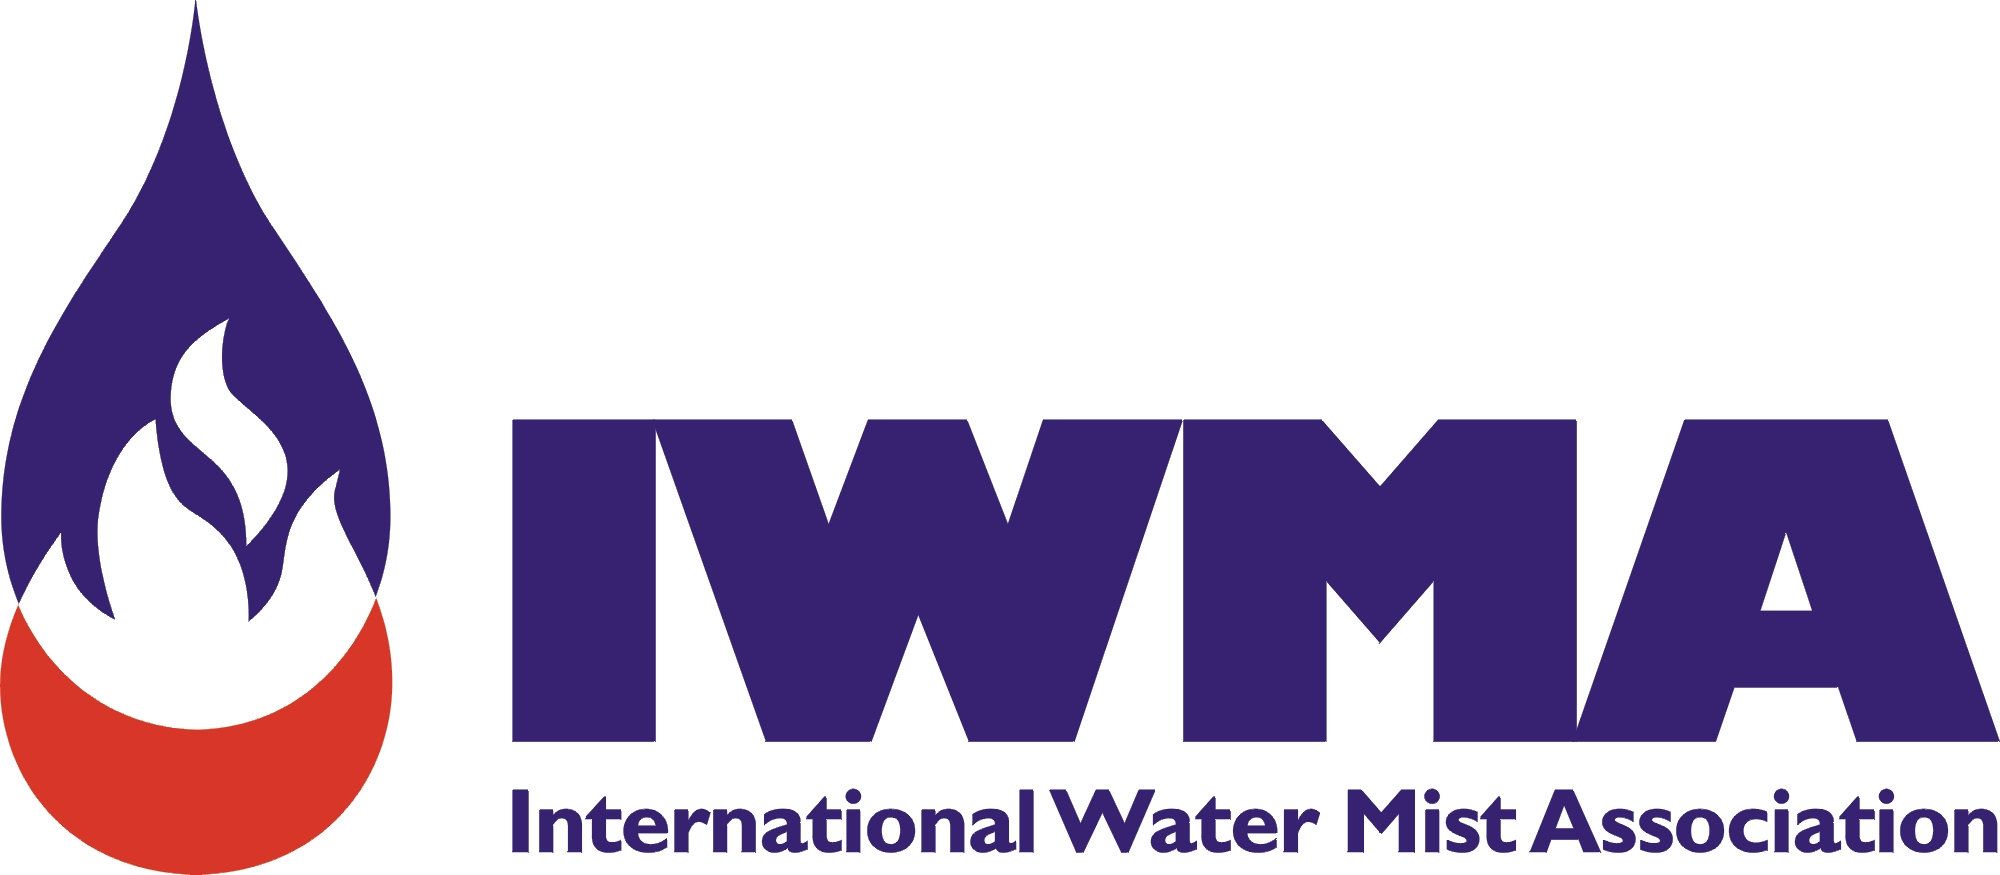 IWMA (International Water Mist Association)